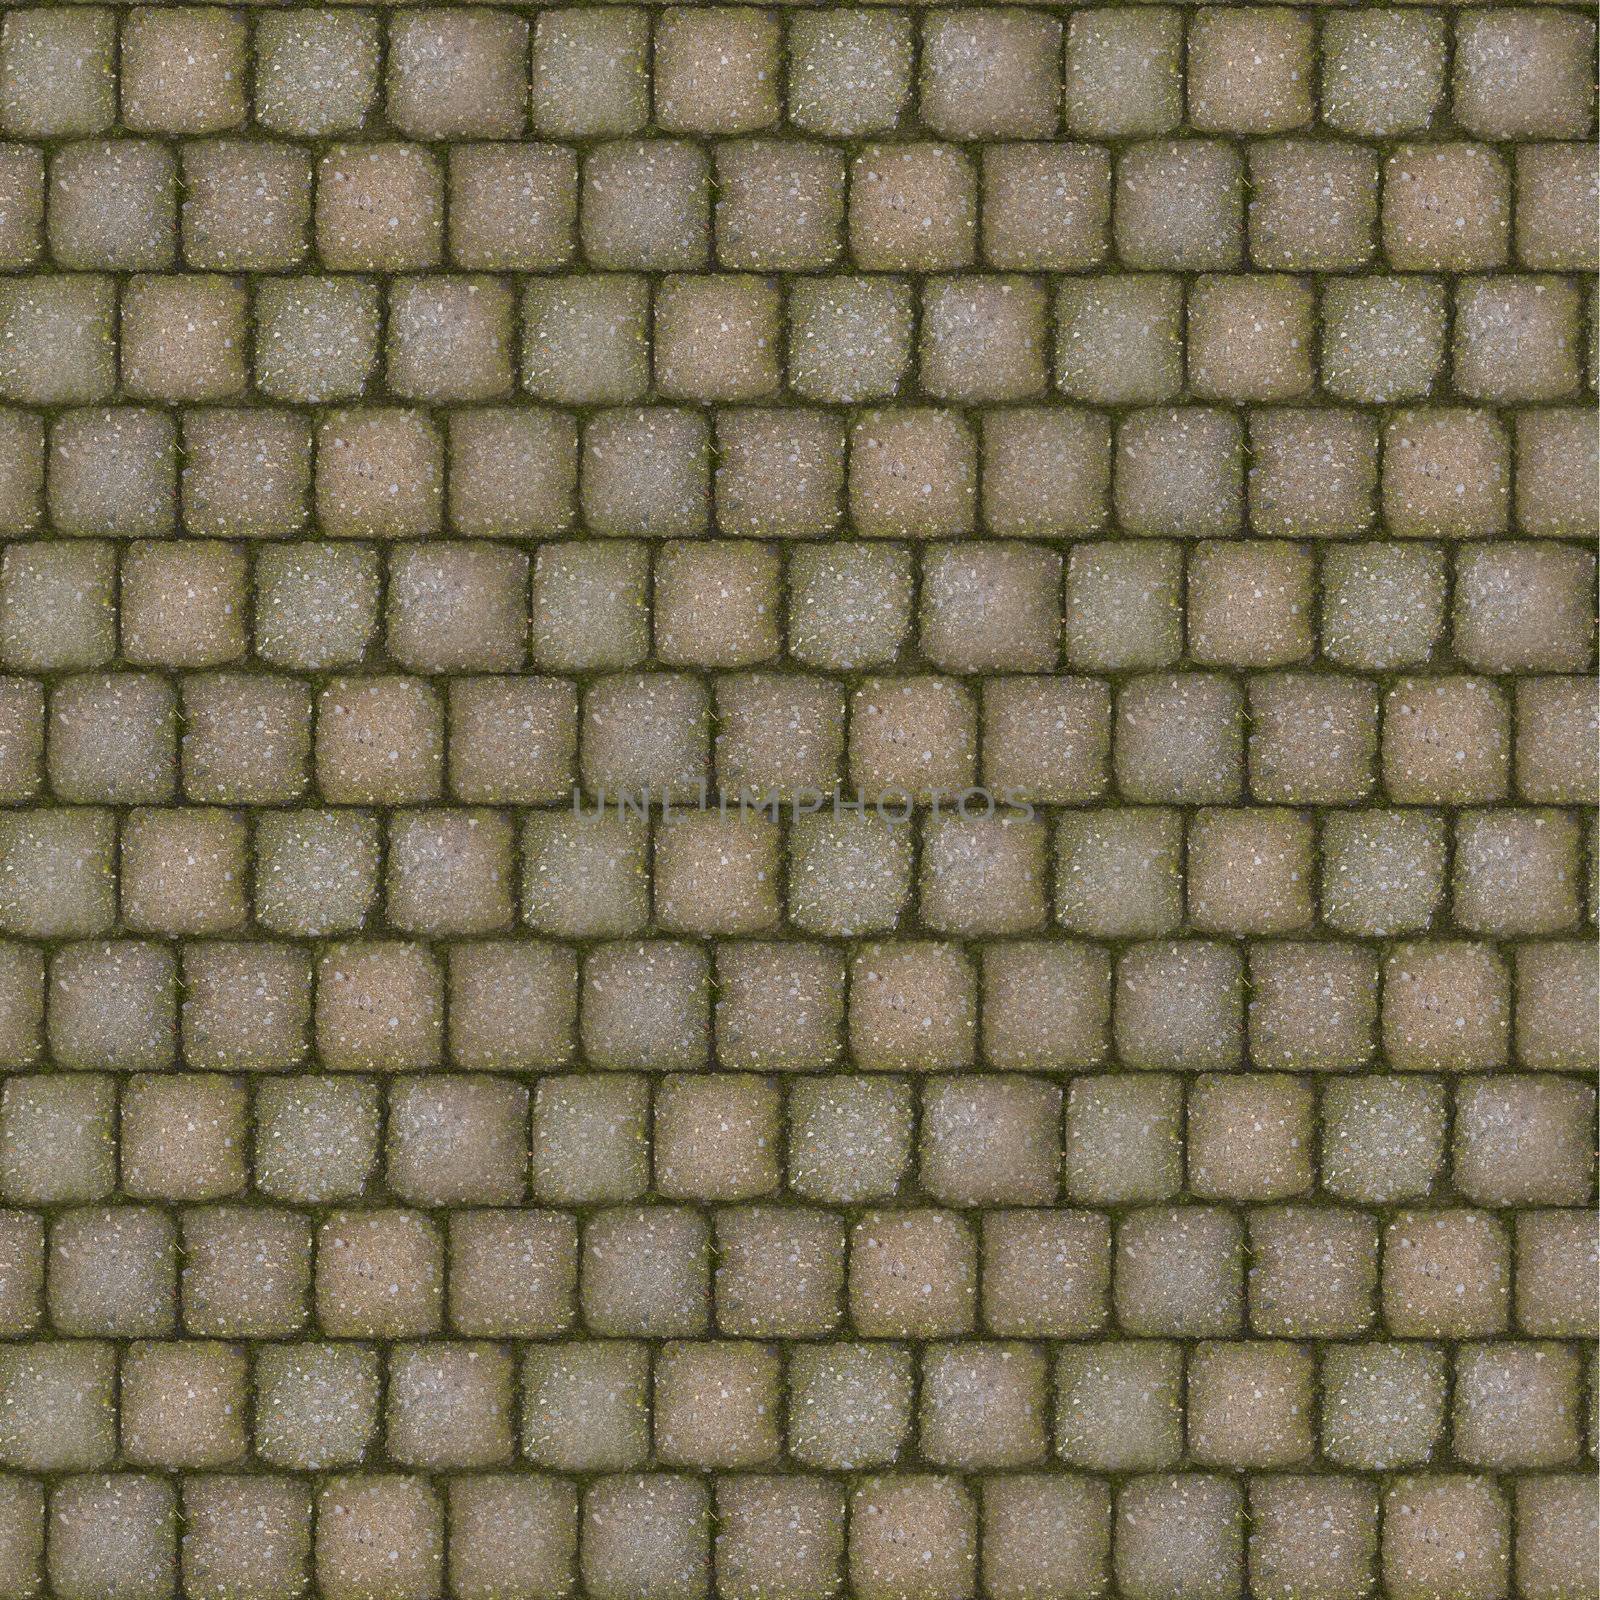 Tiling Stone Sidewalk texture by charlotteLake